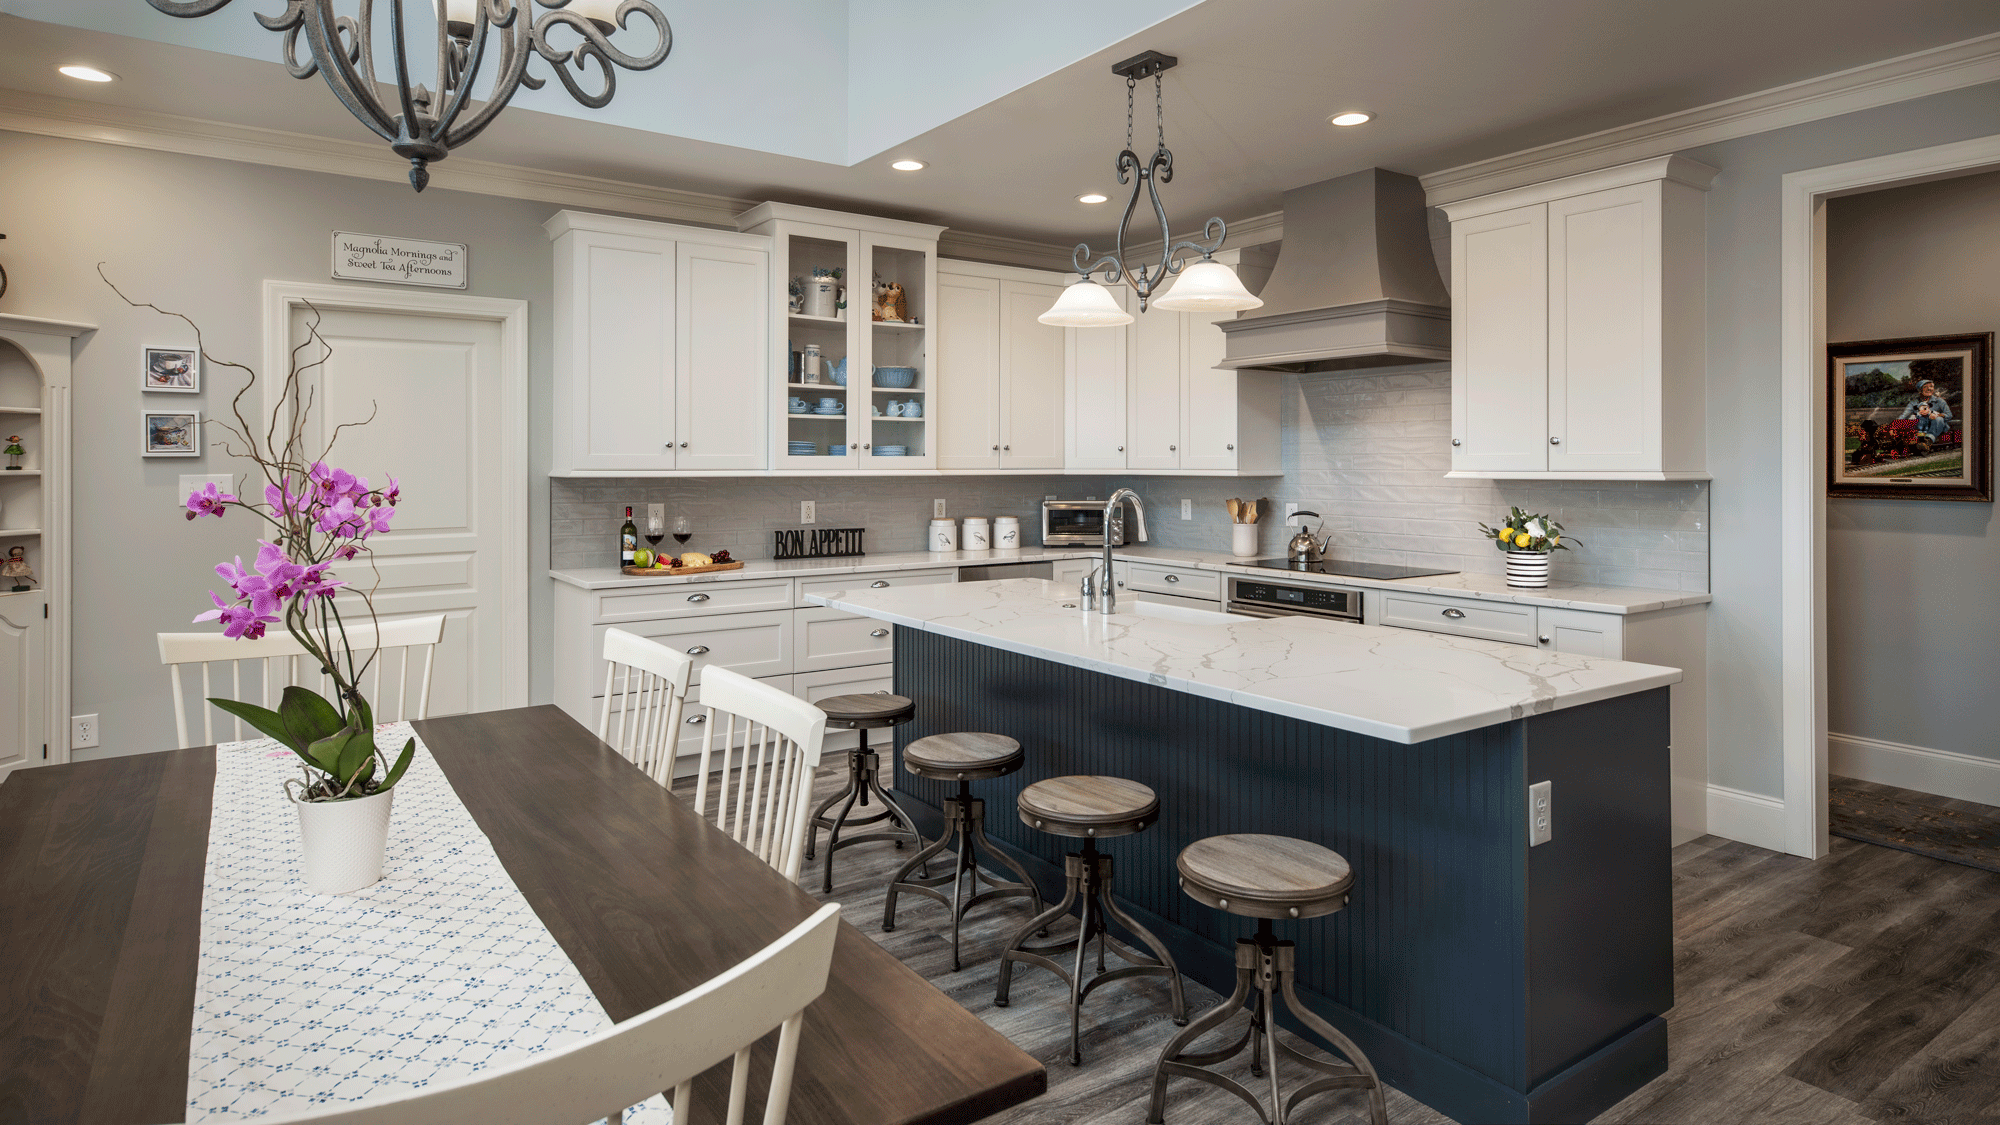 sleek kitchen remodel with flooring, cabinets, pendant lighting, recessed lighting, tile backsplash, island, seating